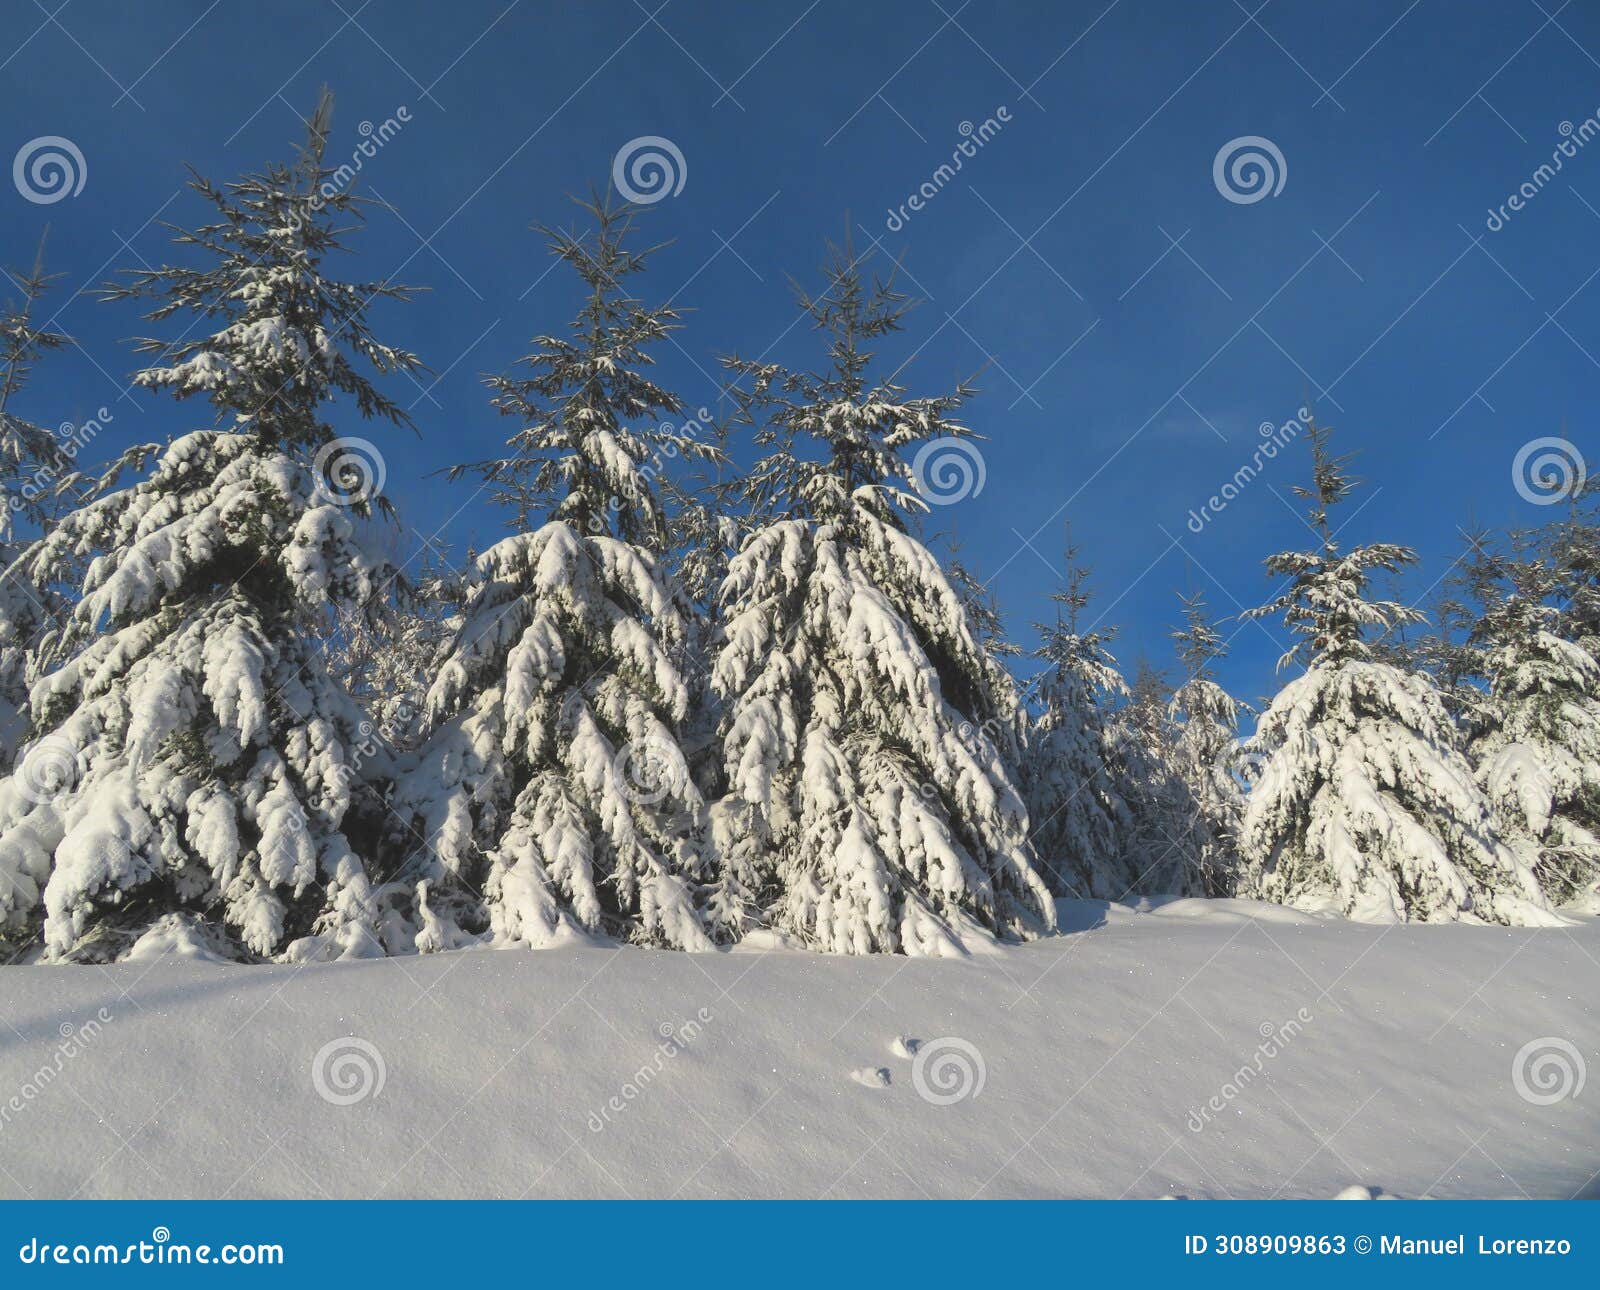 snow white cold winter beautiful ice cream trees landscape